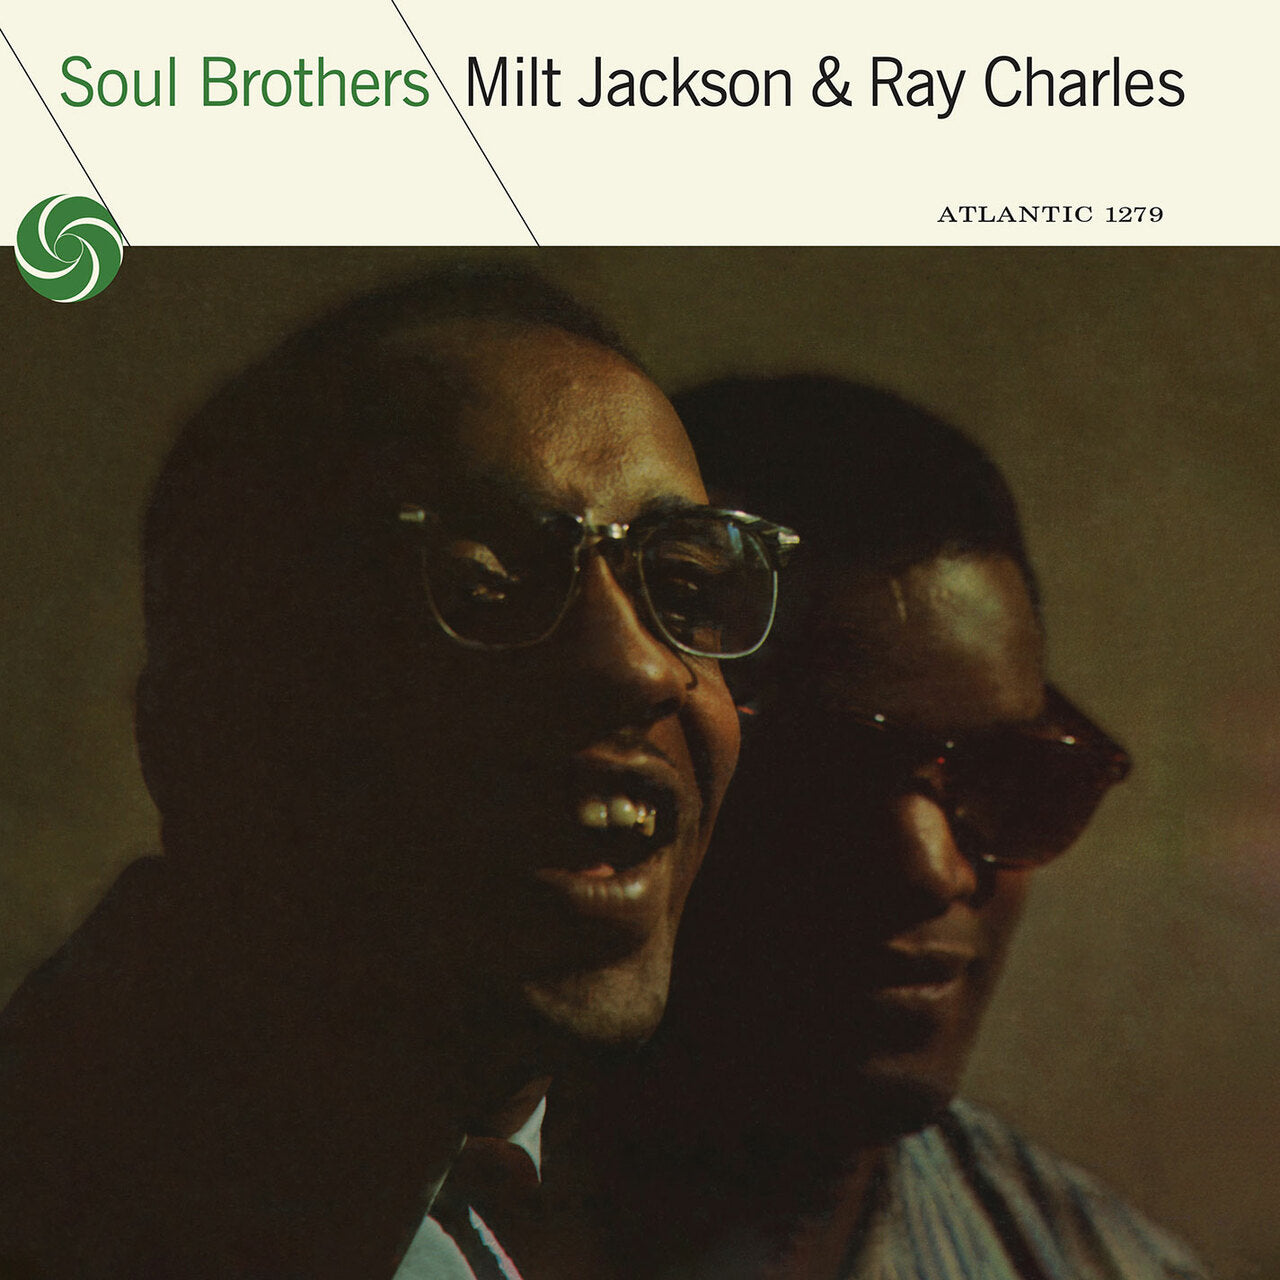 Milt Jackson & Ray Charles  "Soul Brothers" [mono]